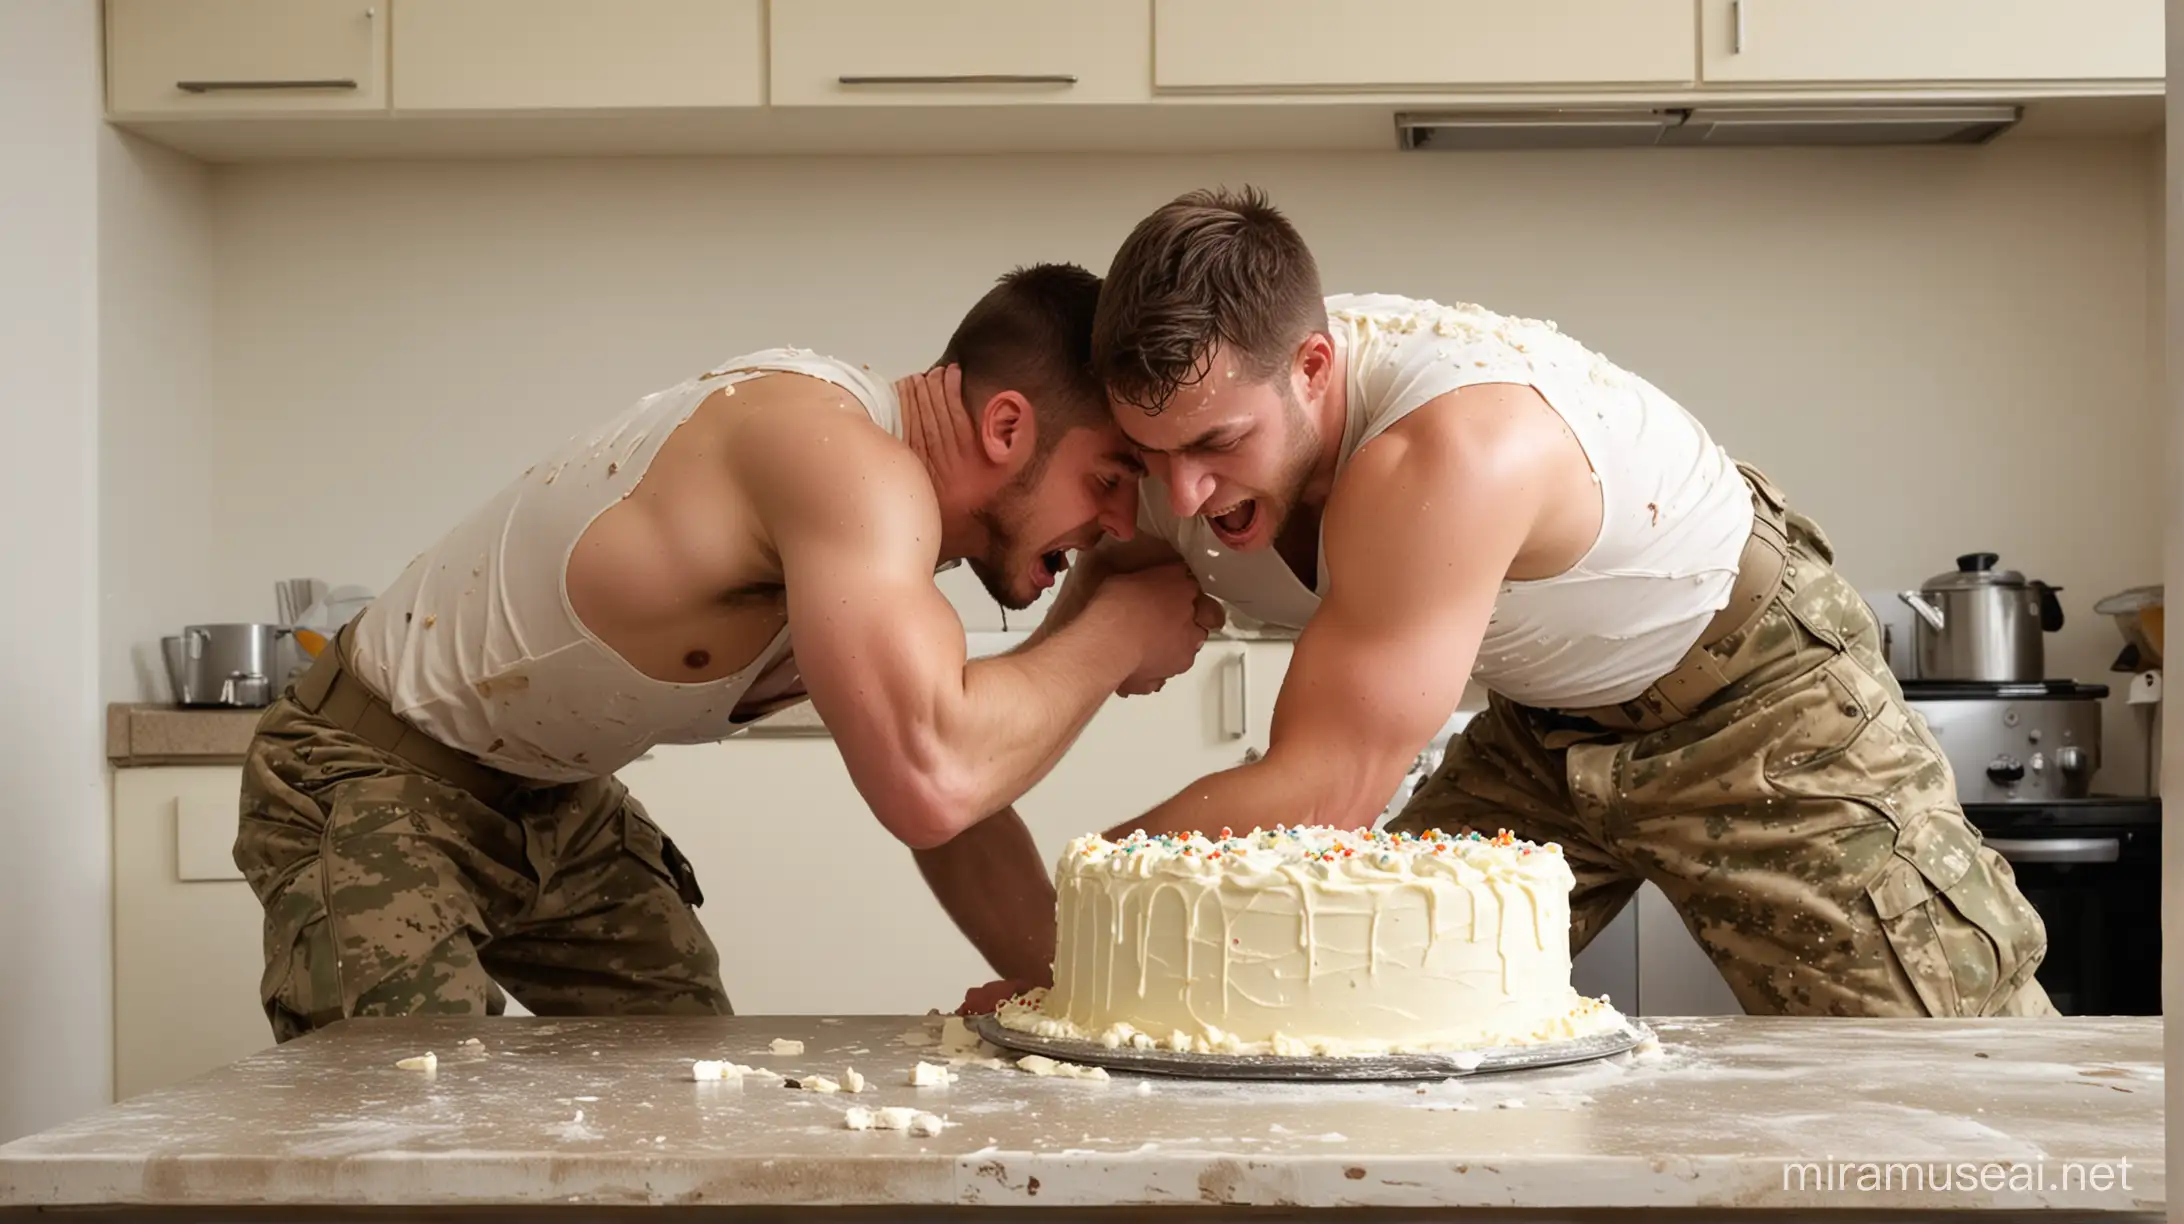 Soldiers Wrestle in Cake Fight Uniformed Men Grapple Amidst Cake Ruin